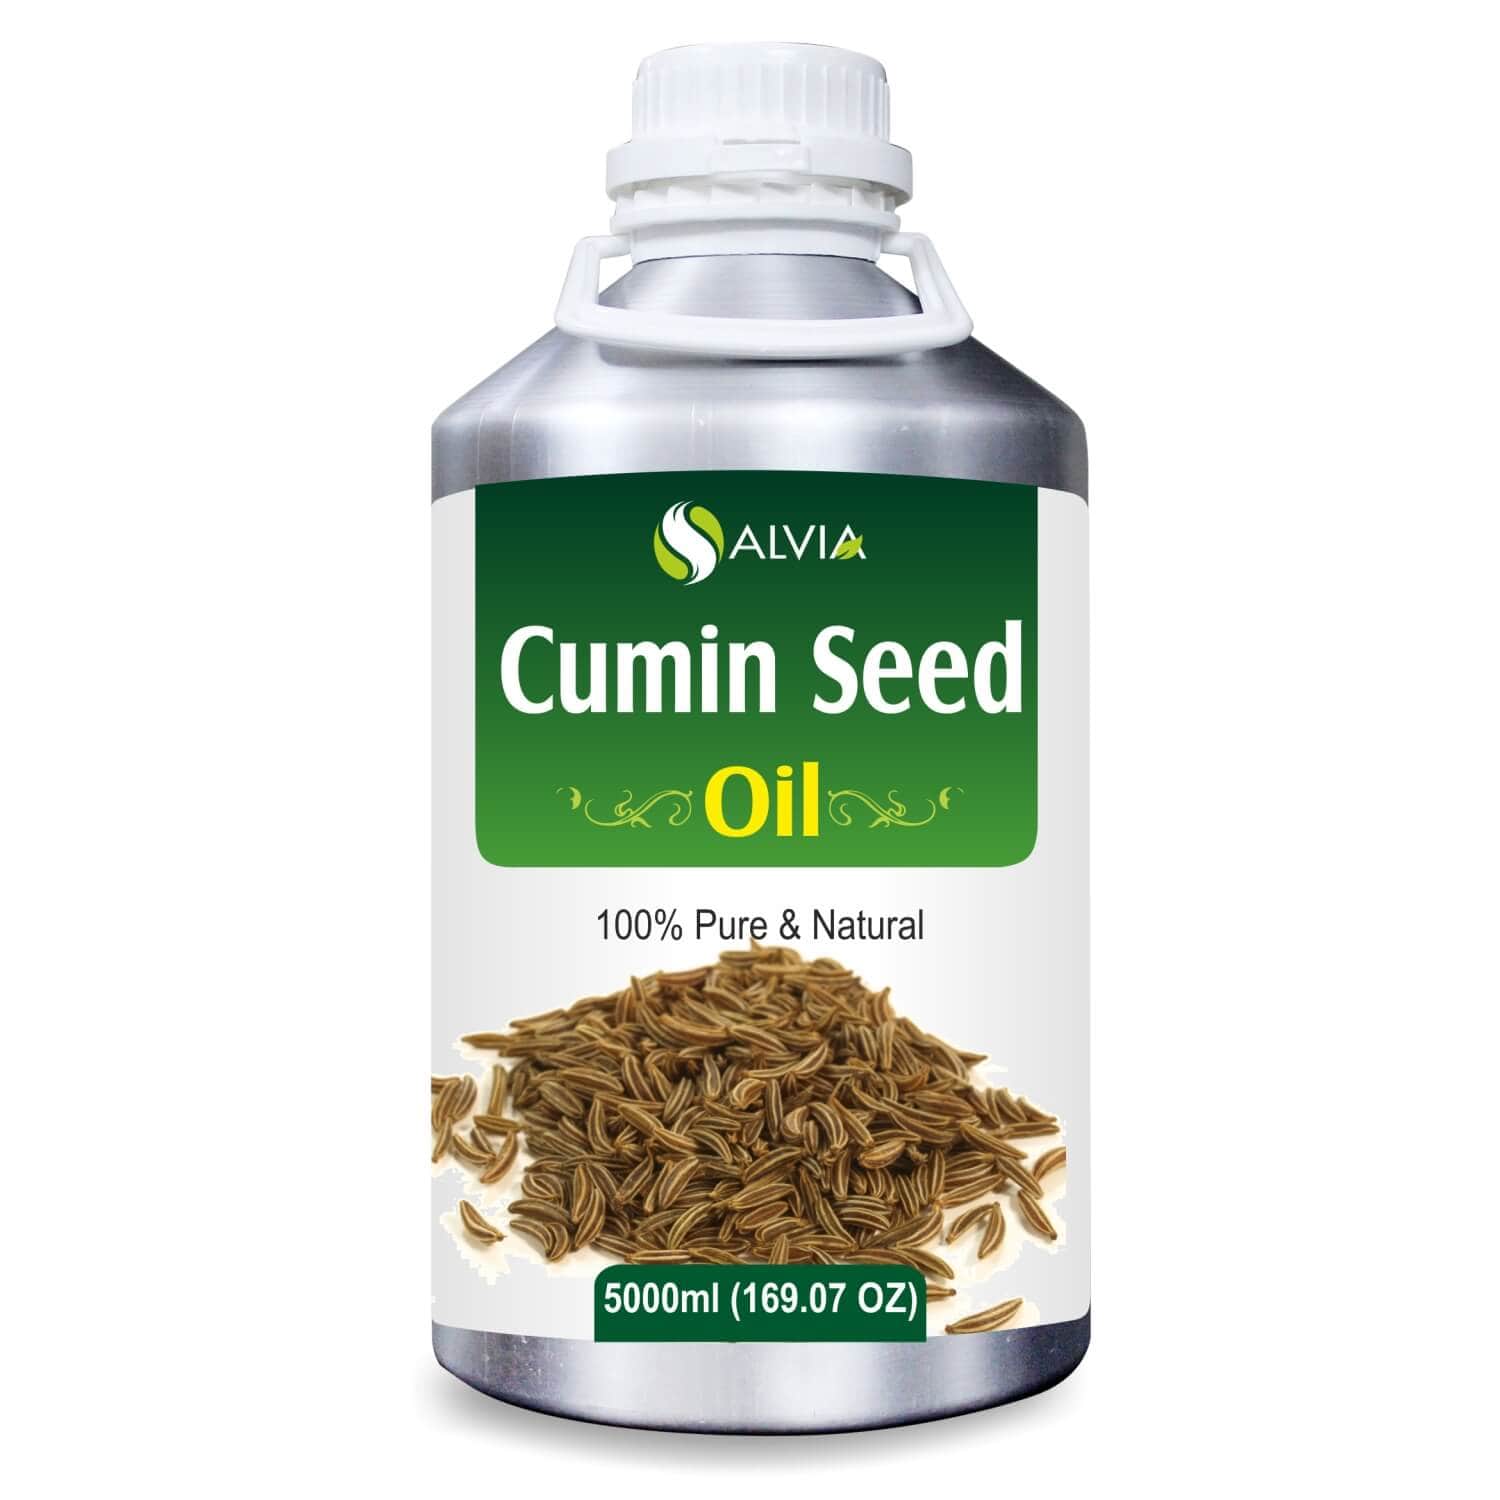 Salvia Natural Essential Oils 5000ml Cumin Seed Oil (Cuminum Cyminum) 100% Natural Pure Essential Oil